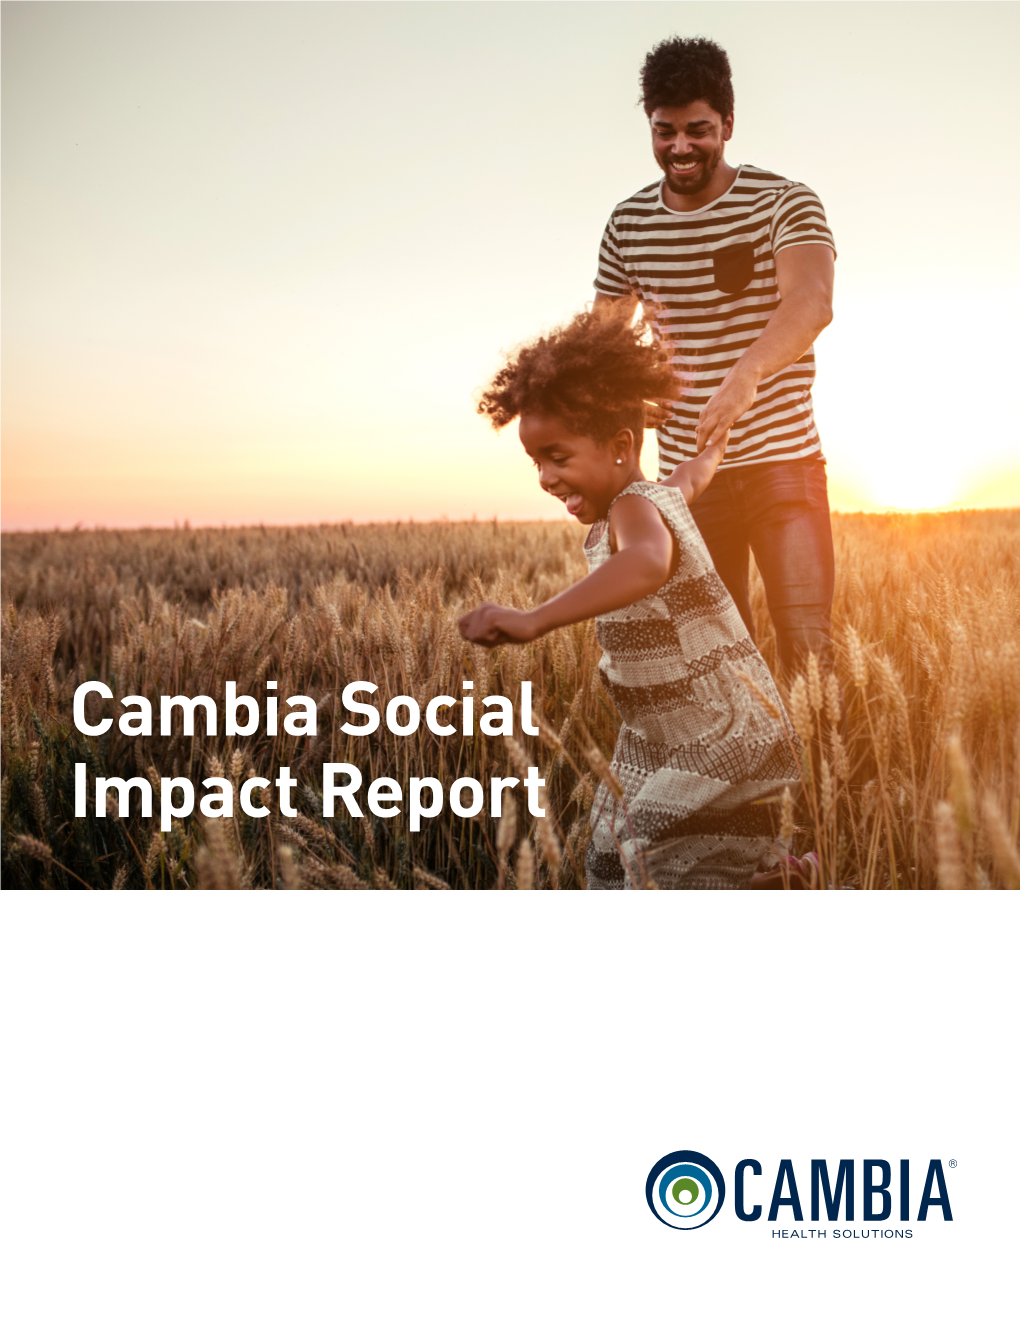 Cambia Social Impact Report Dear Friends